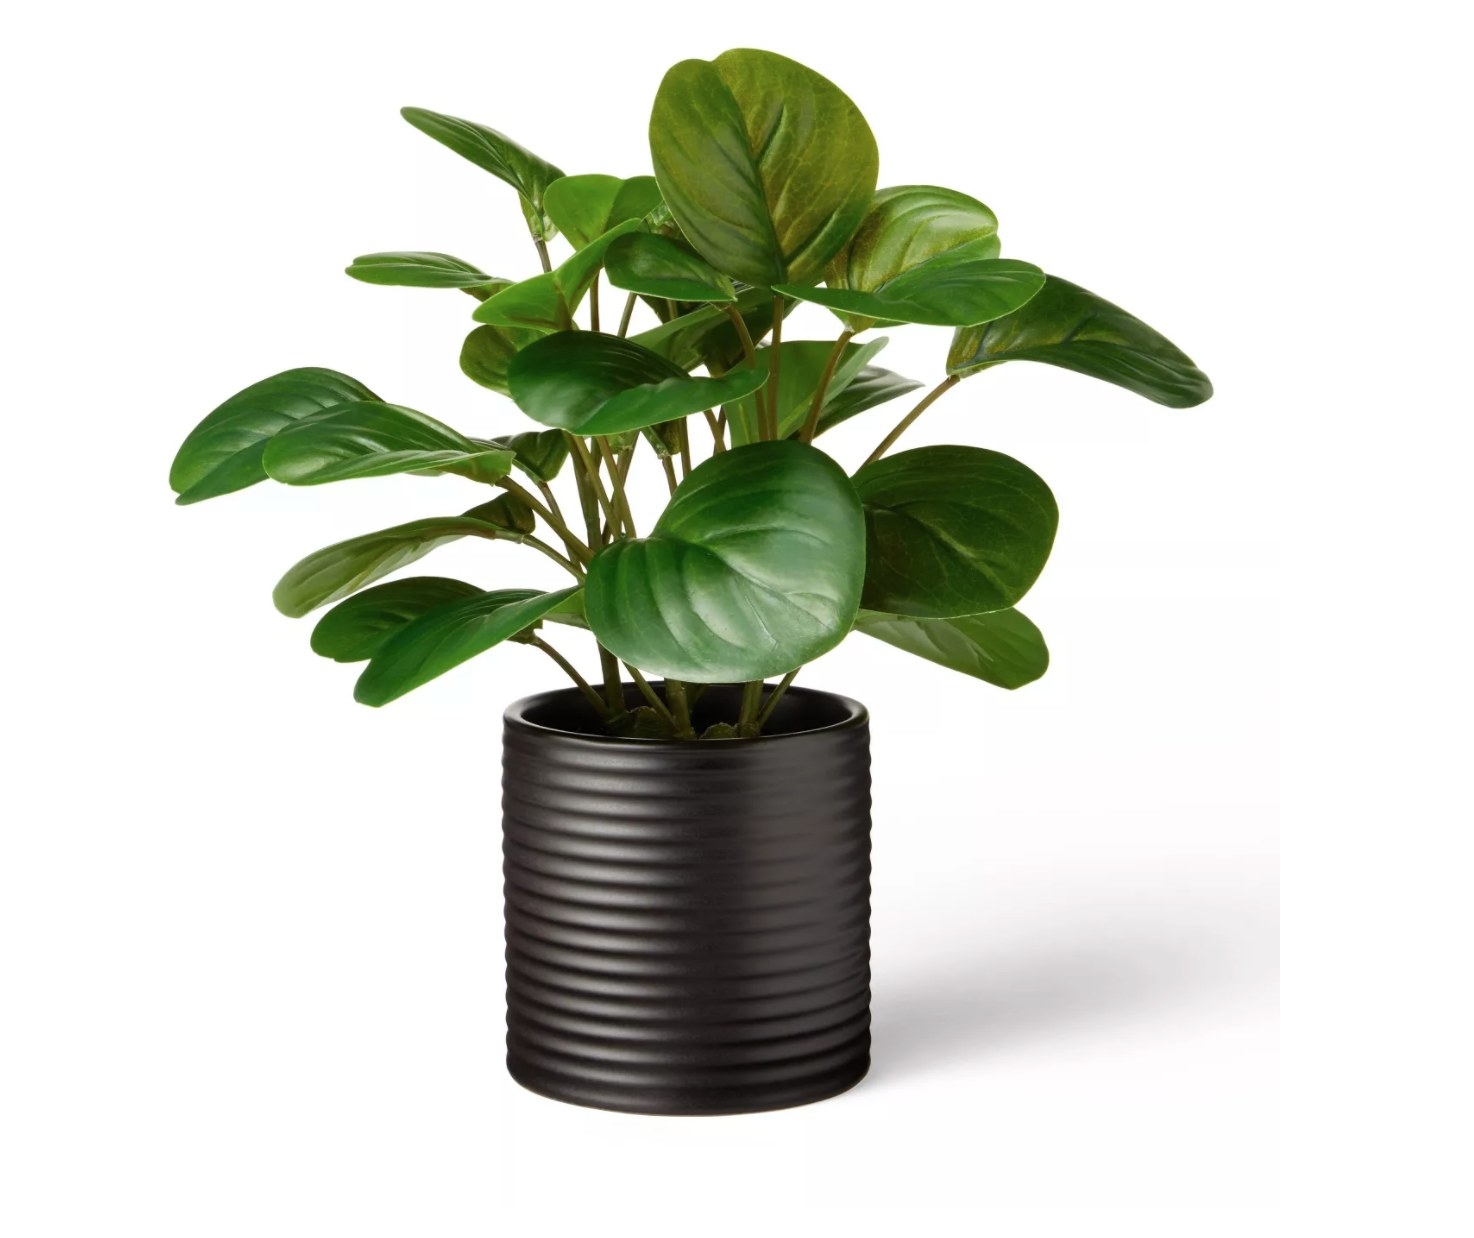 the artificial Peromia plant in a black ribbed ceramic pot